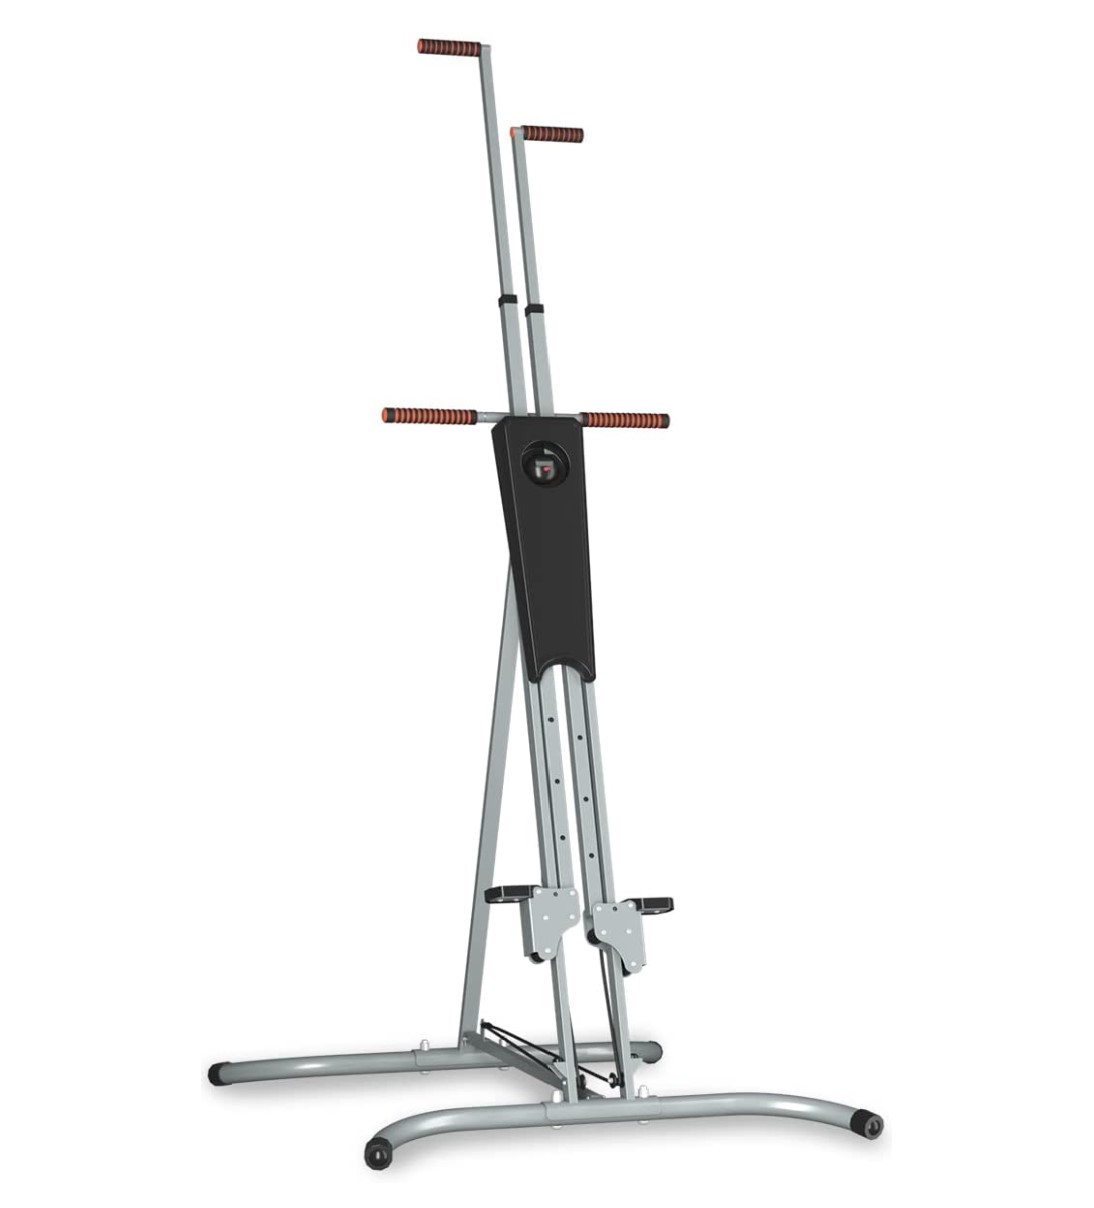 Dripex Vertical Climber Exercise Machine